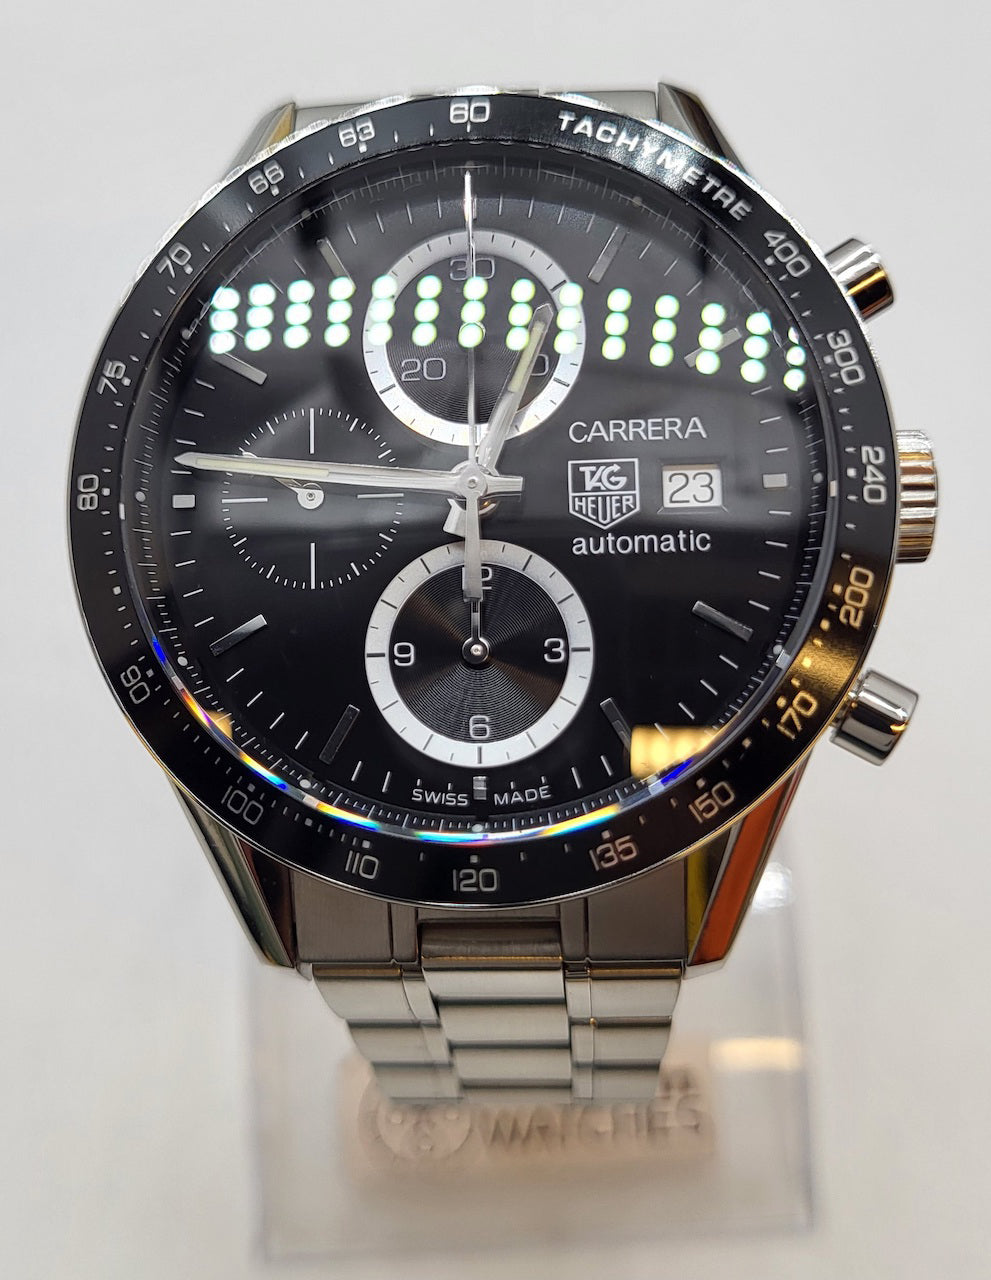 TAG HEUER Carrera Black Chronograph Dial Men's Automatic Watch CV2010/4